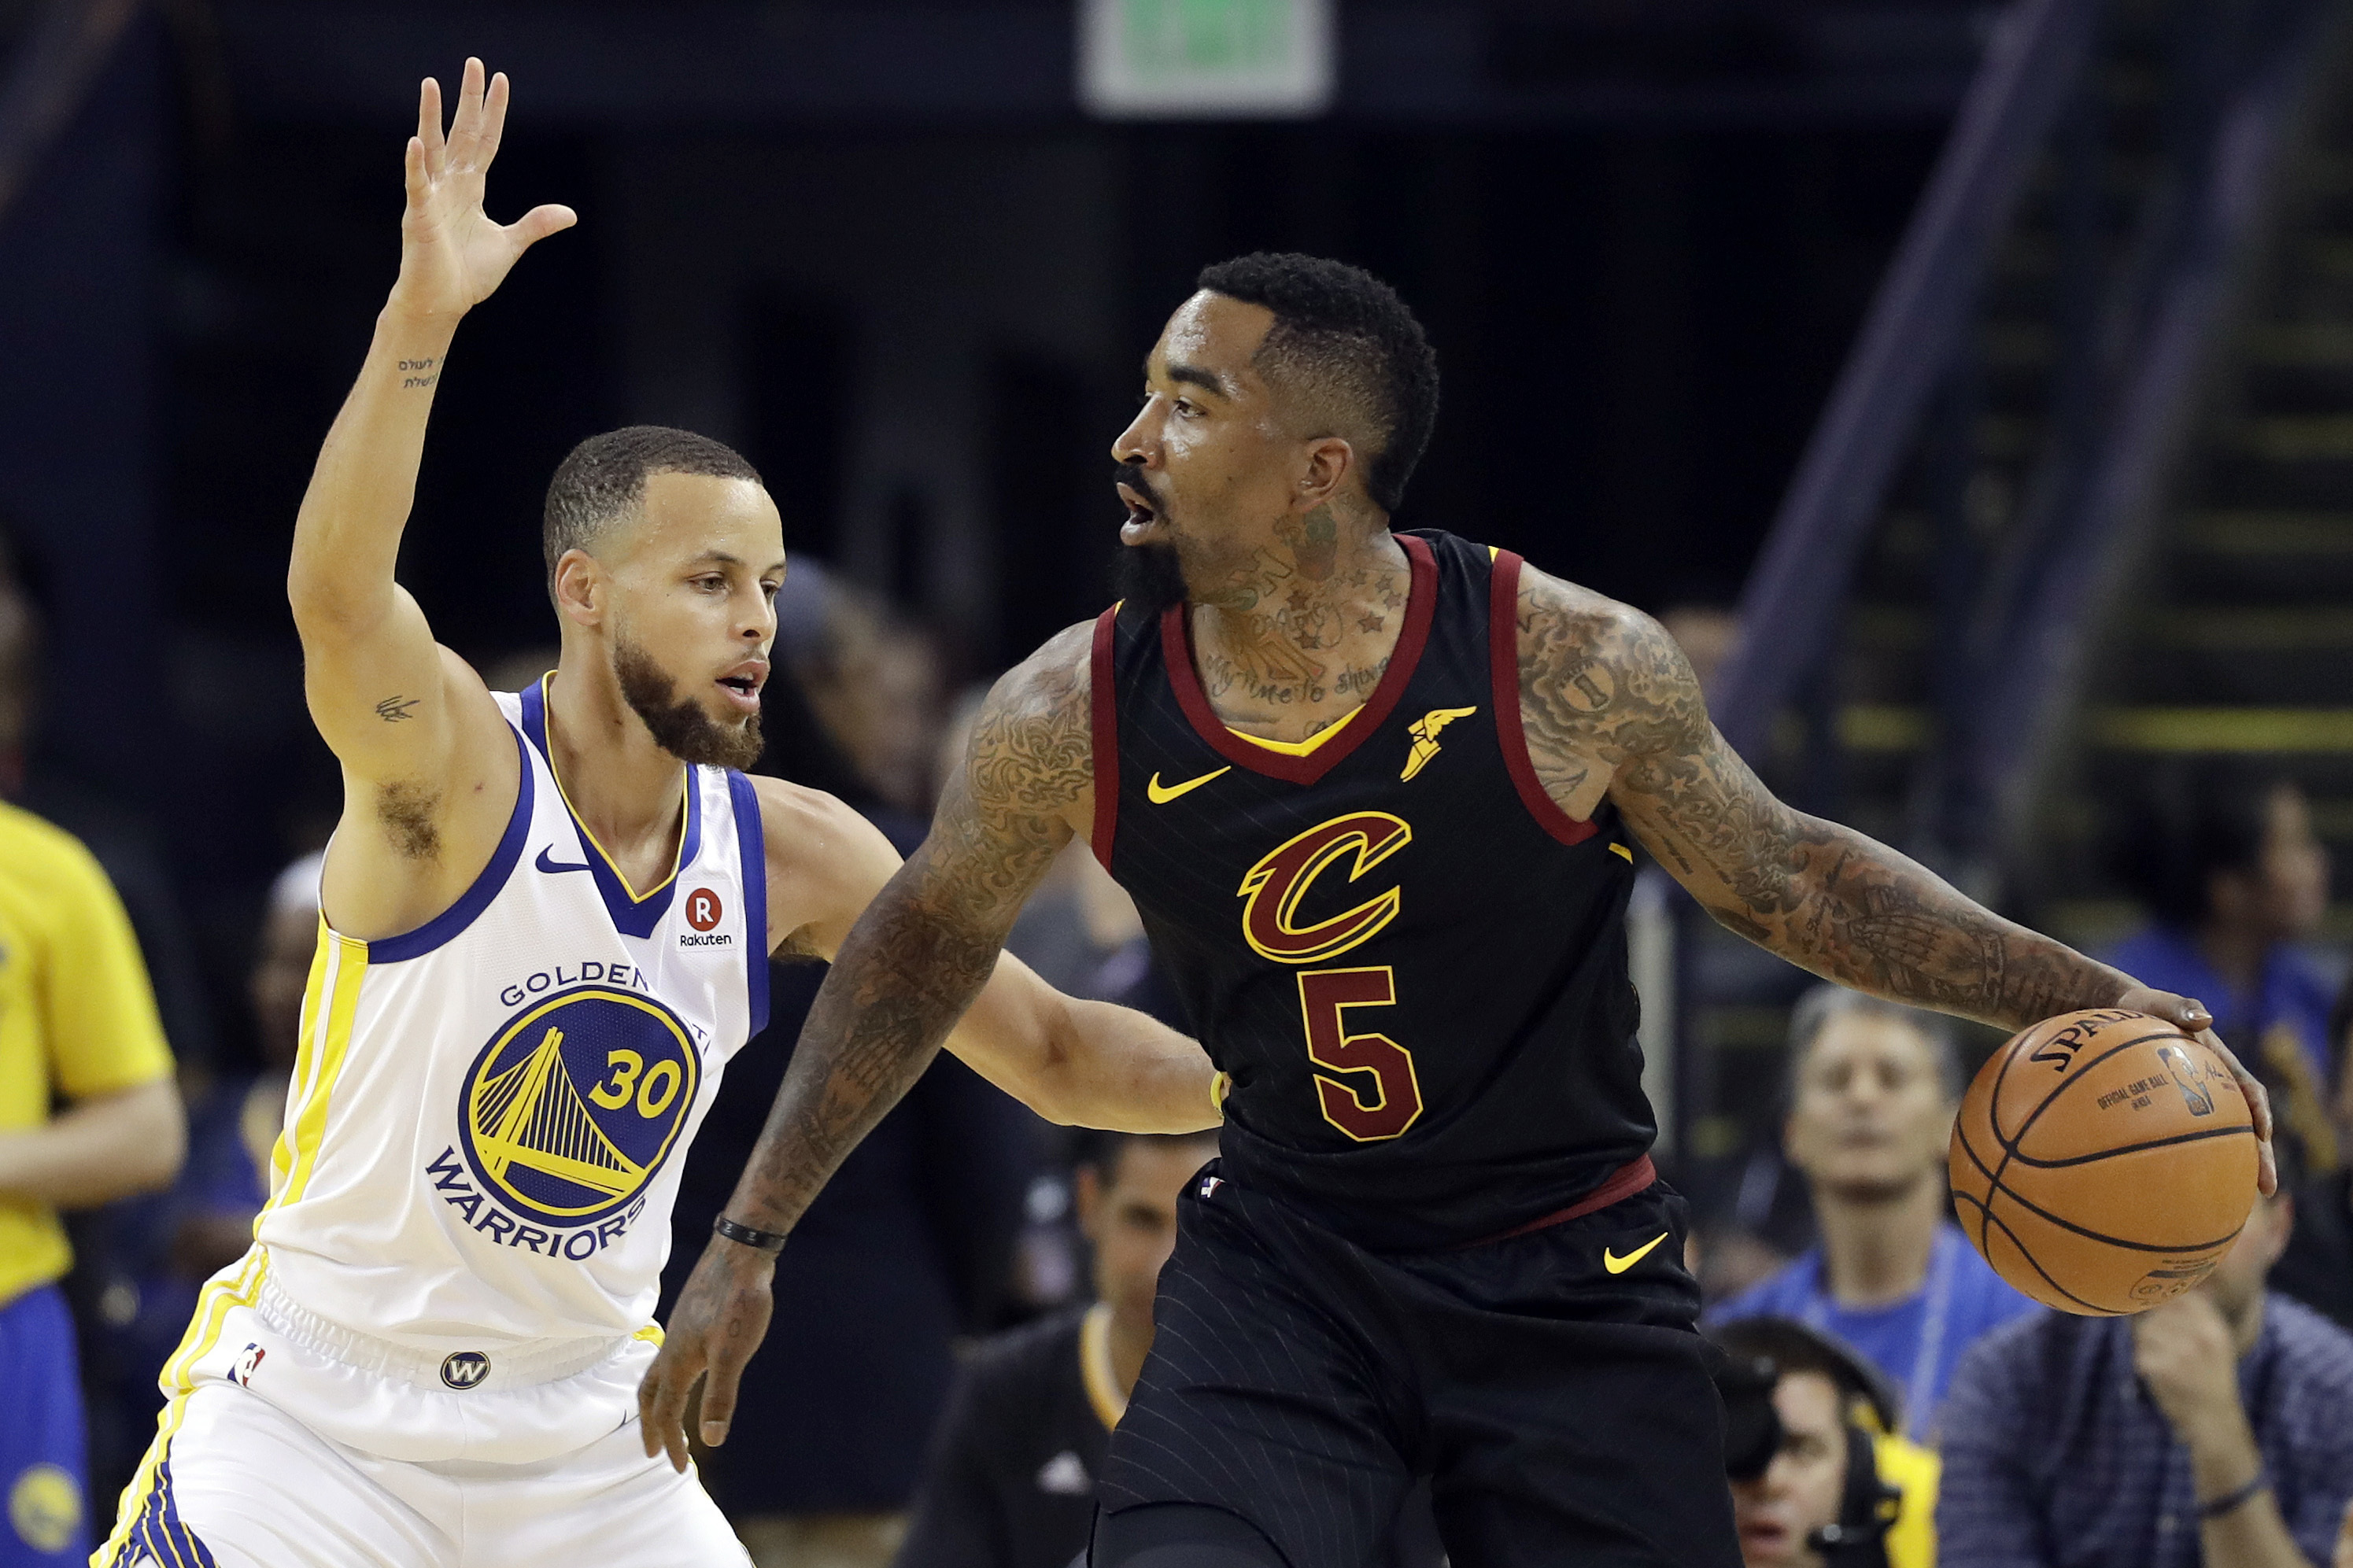 Warriors vs Cavs Game 4 highlights: 2018 NBA Finals score, stats